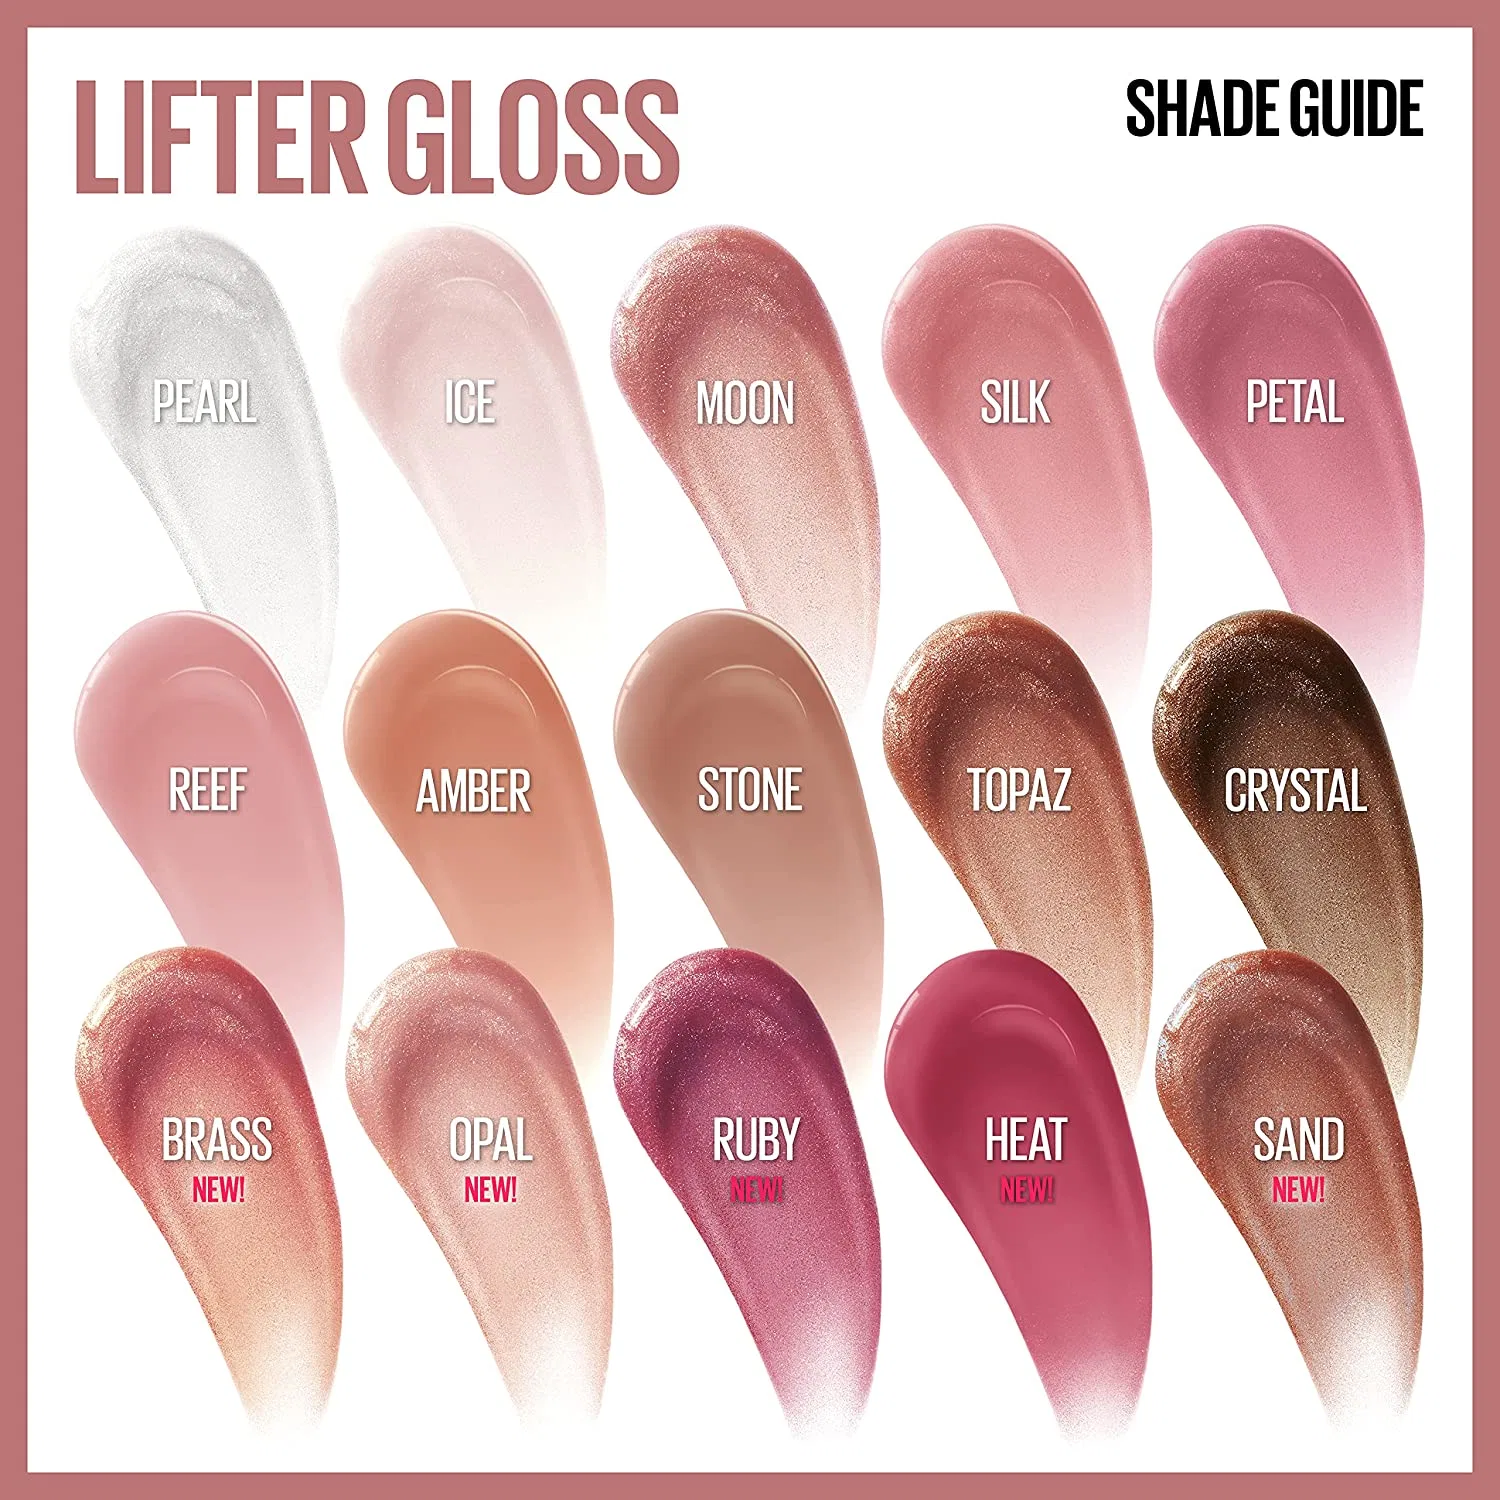 OEM Shiny Matte Vegan Liquid Lipstick Waterproof Private Label Lipgloss Cosmetics